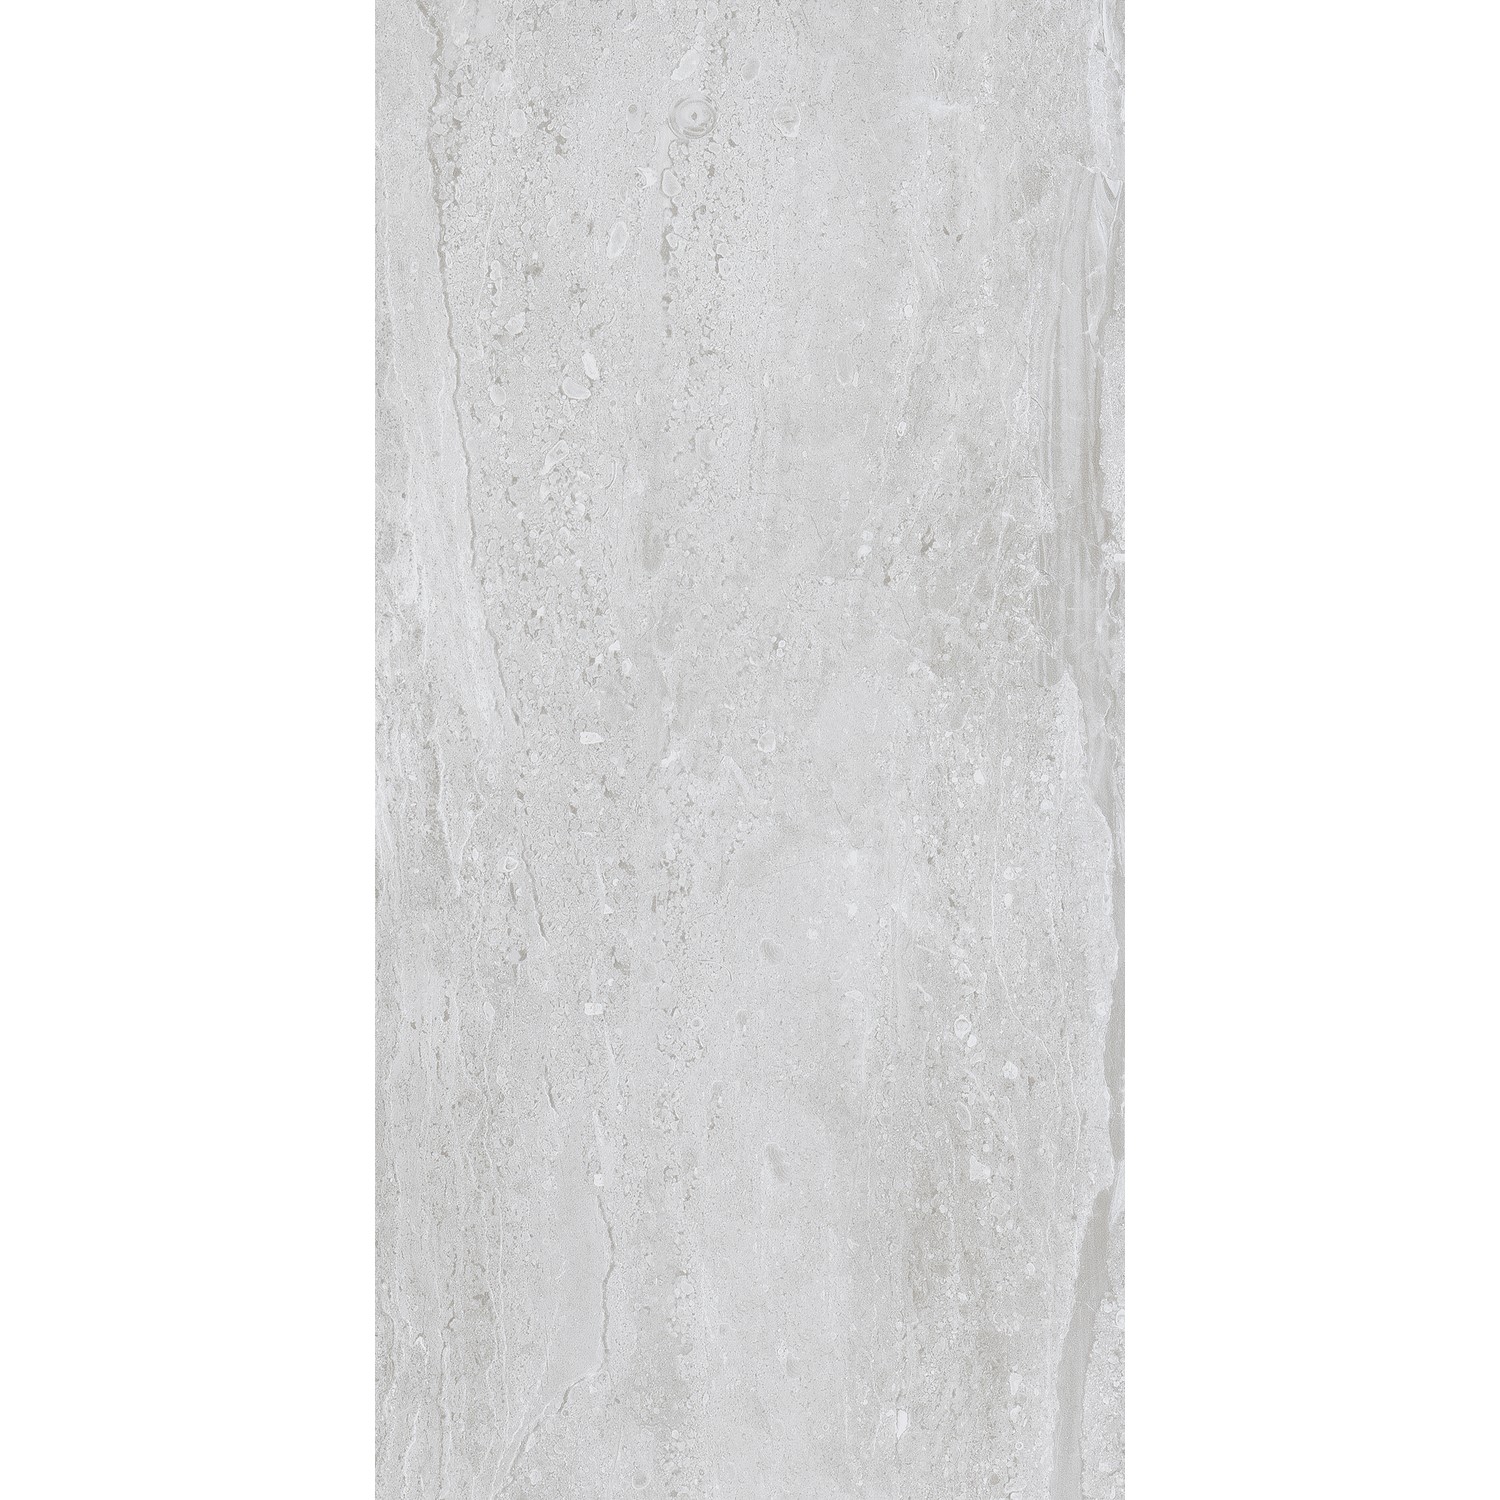 Light Grey Stone Effect Wall Tile 30 x 60cm - Kaya